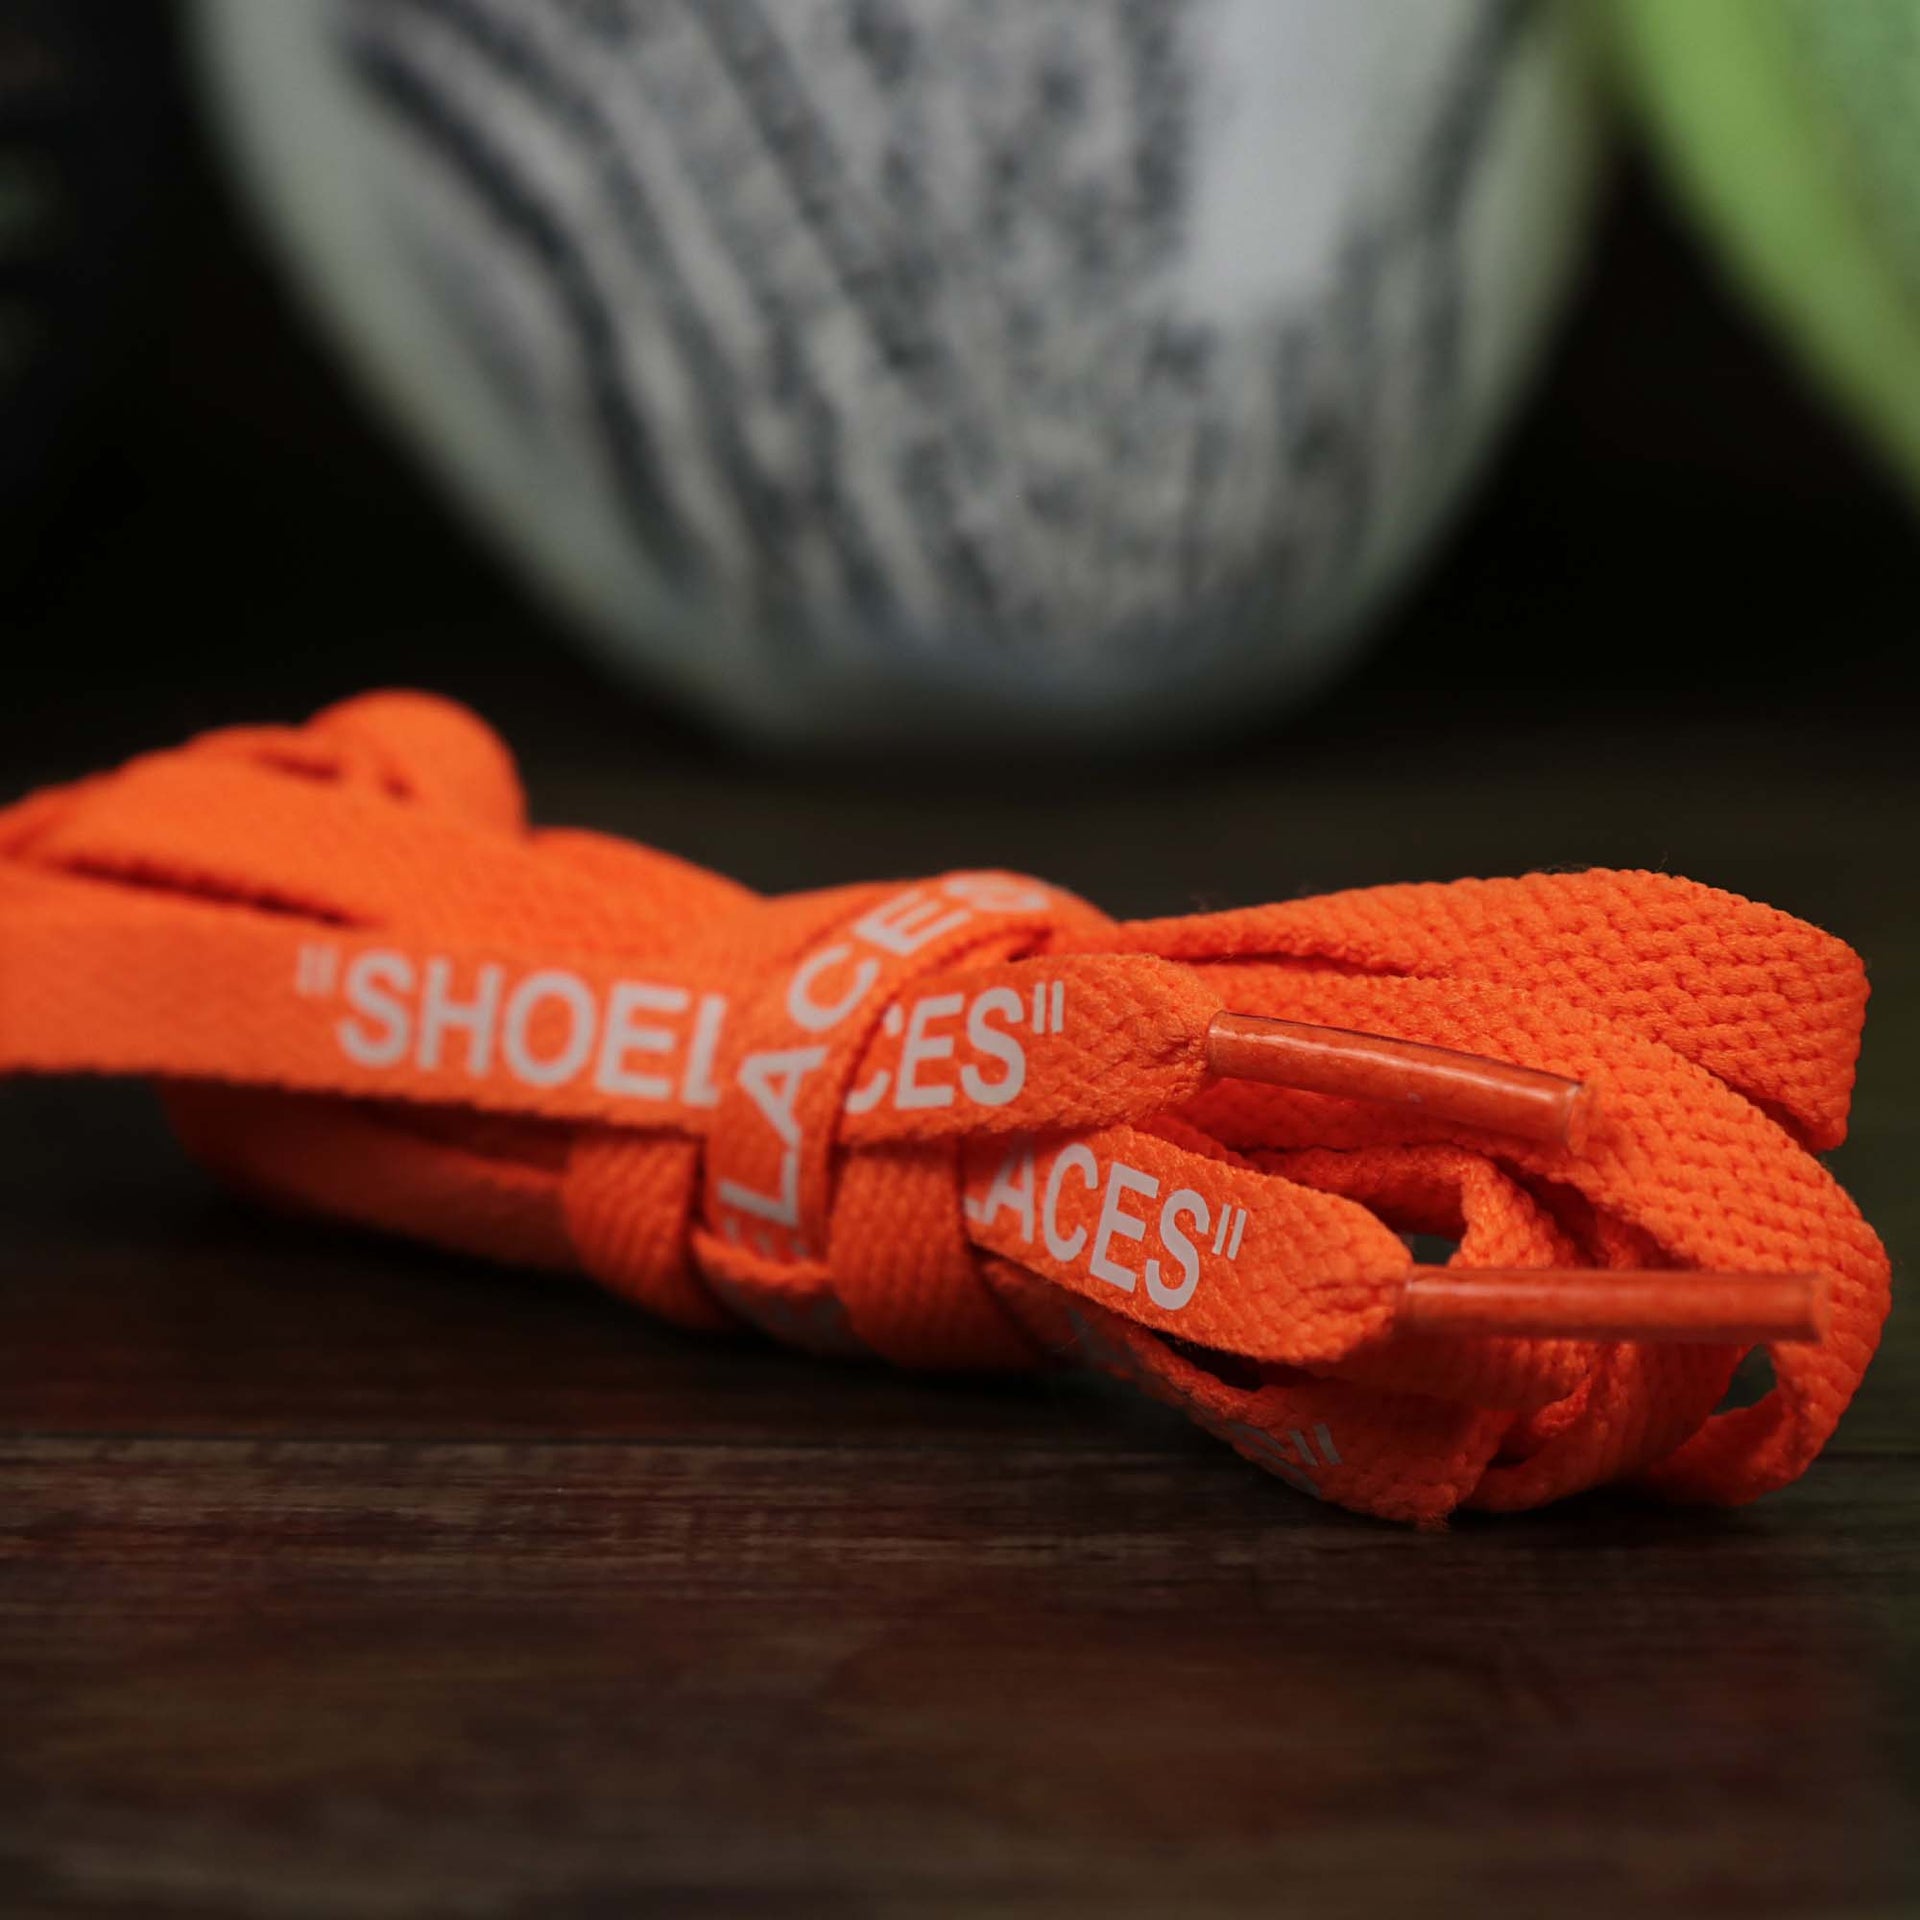 The Flat Orange Shoelaces with “Shoelaces” Print | 120cm Capswag